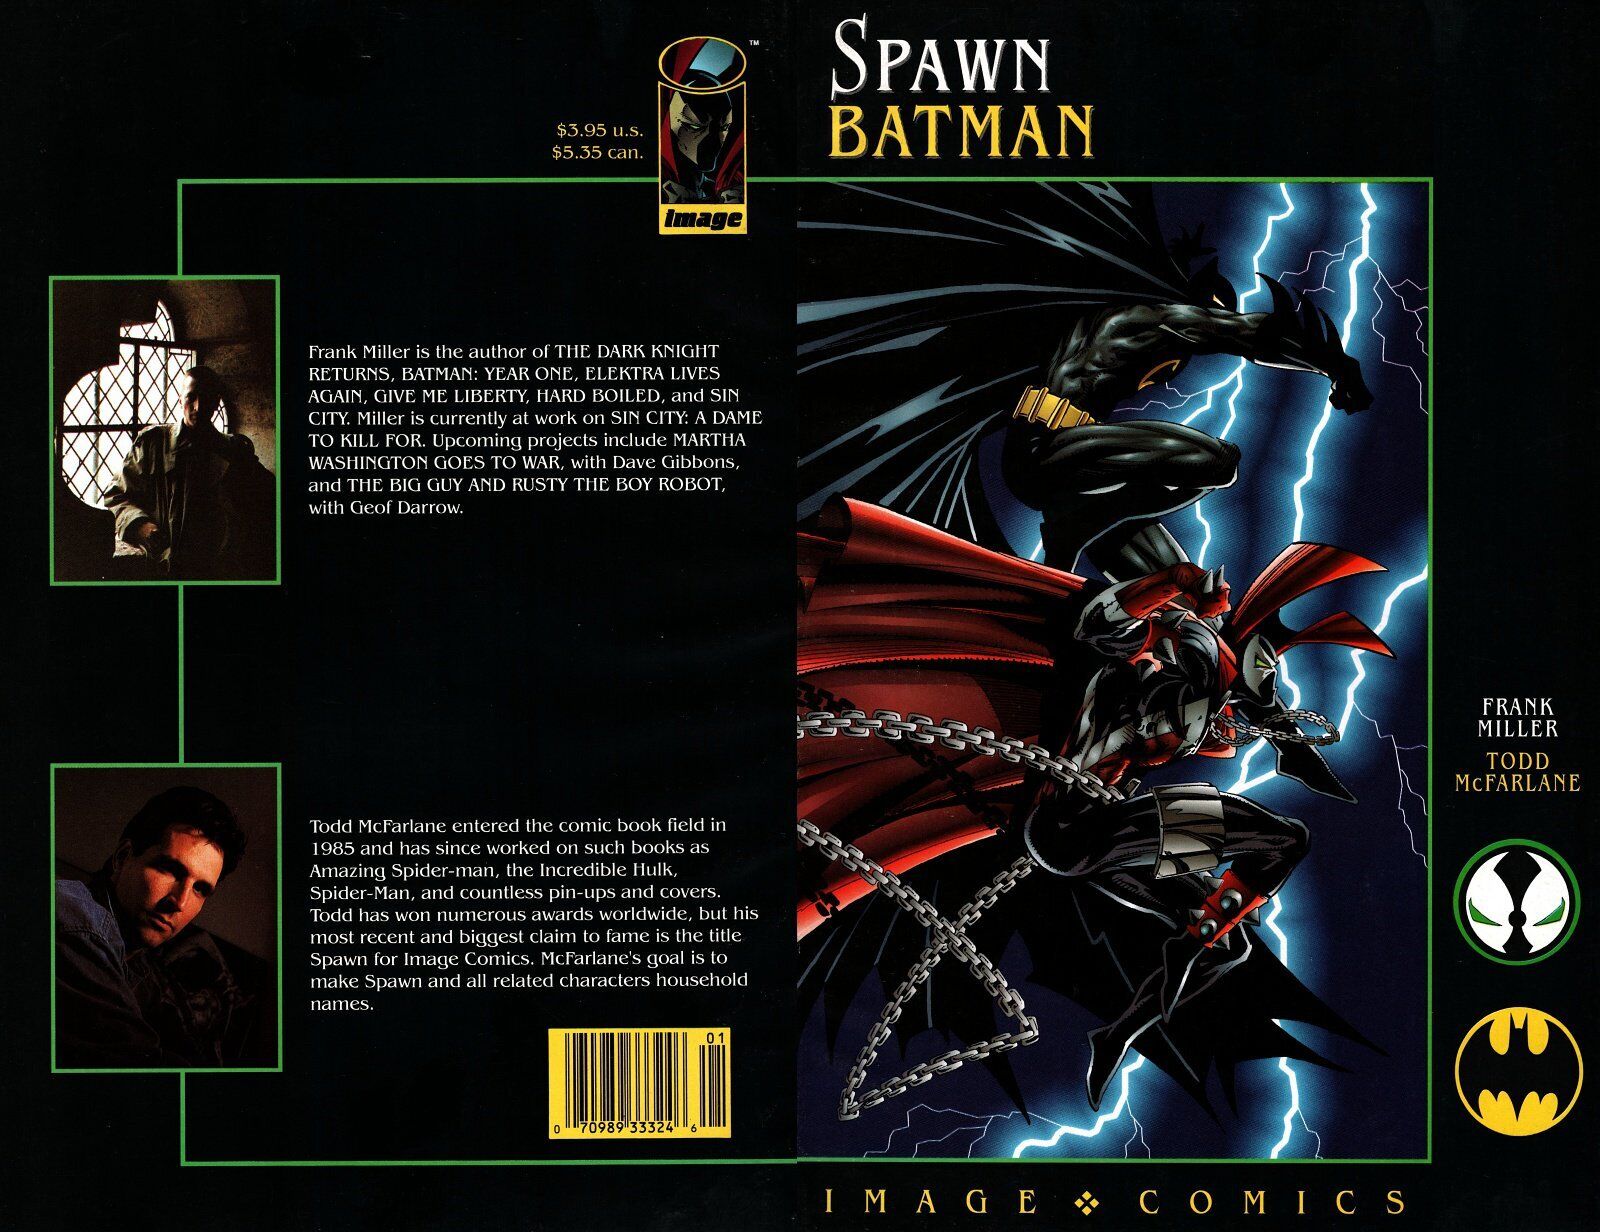 Spawn Batman #1 Newsstand Cover (1994) Image Comics